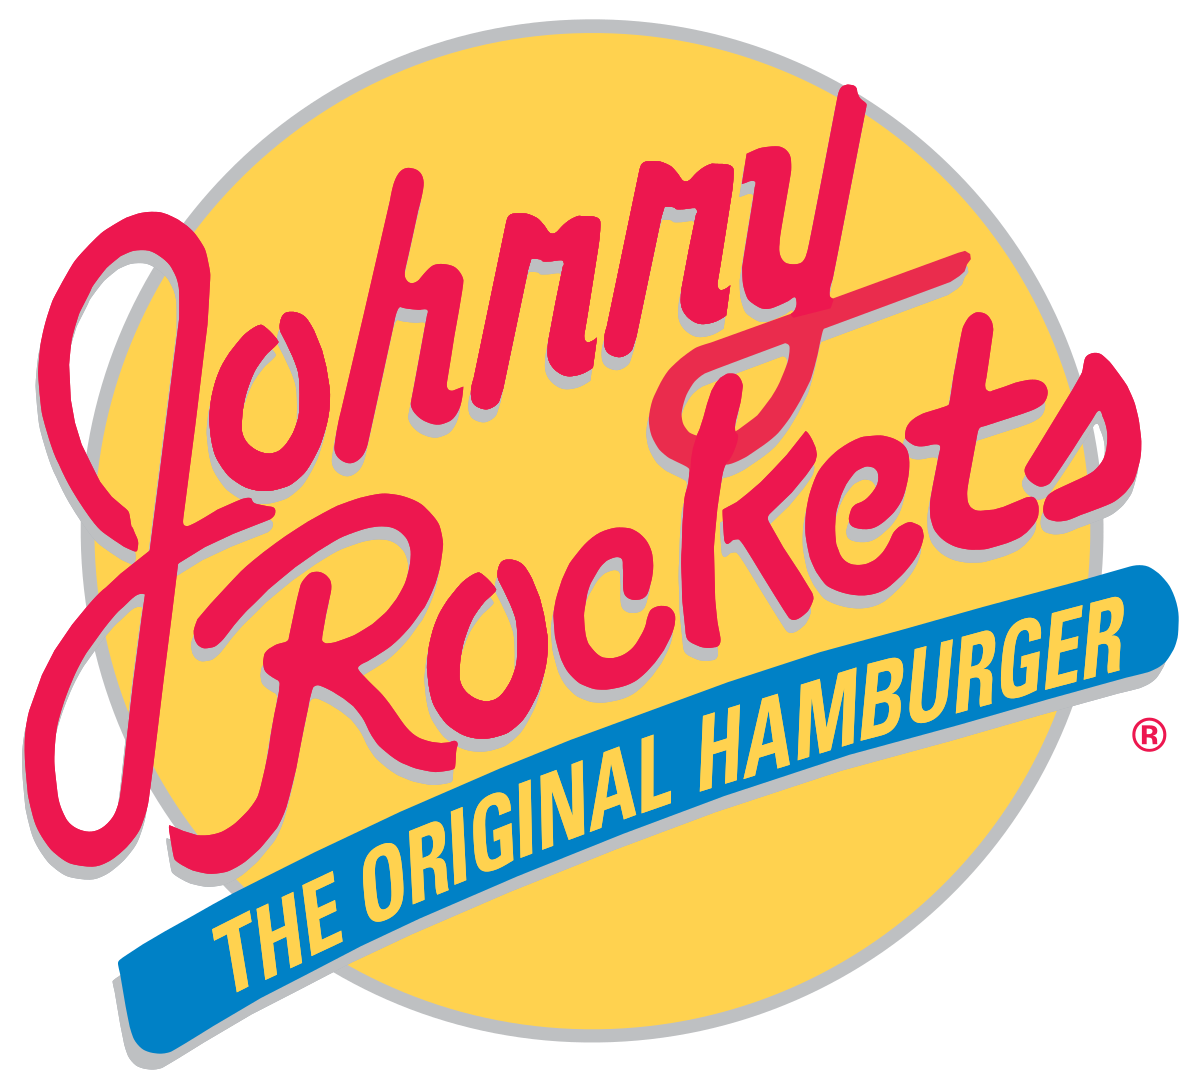 Johnny_Rockets.png